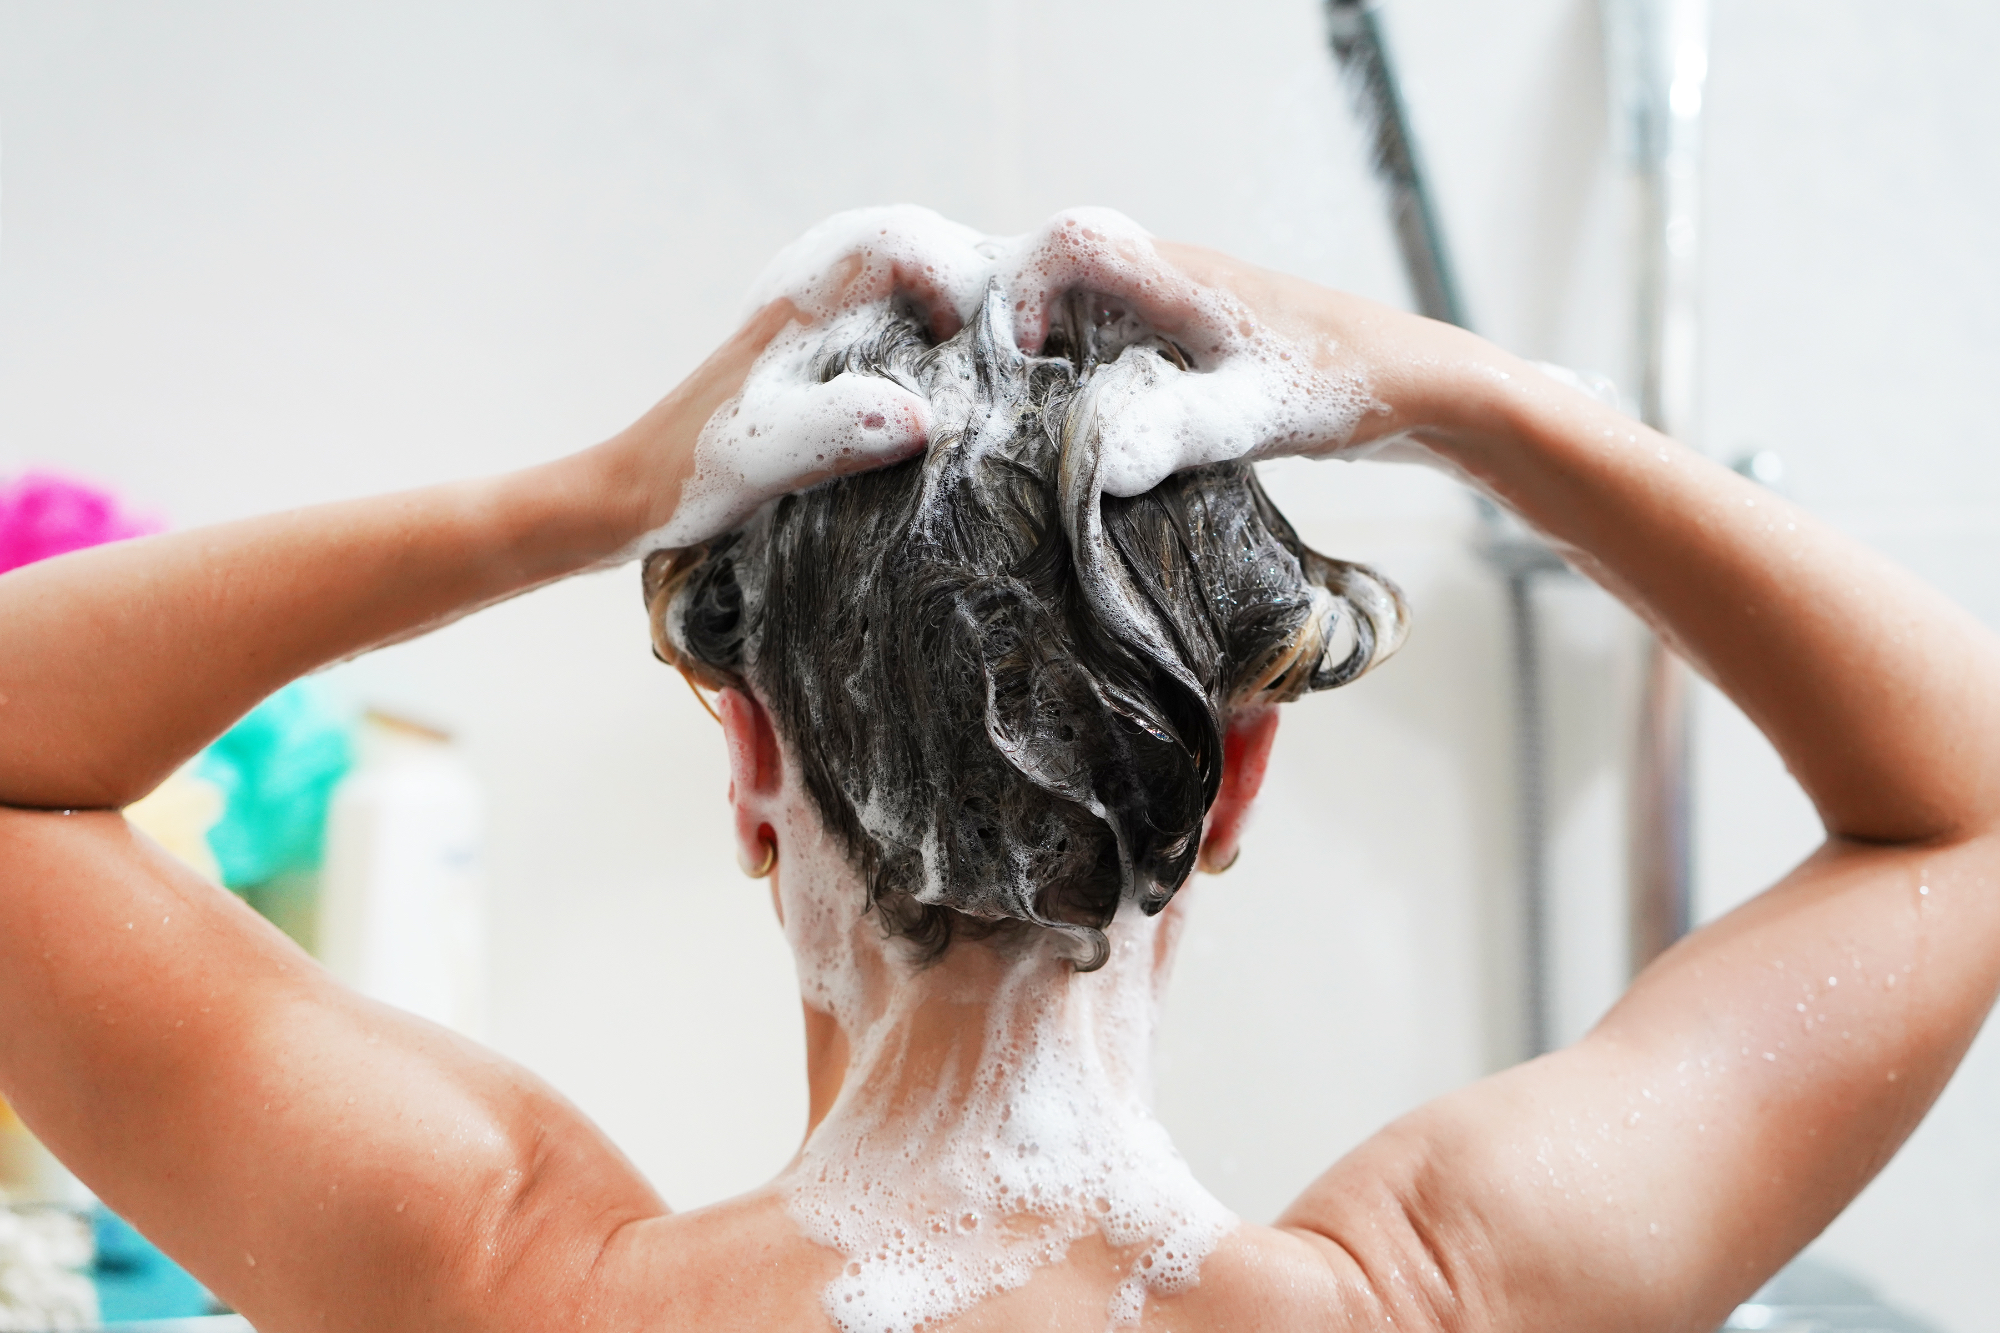 Učinkoviti šampon za rast las